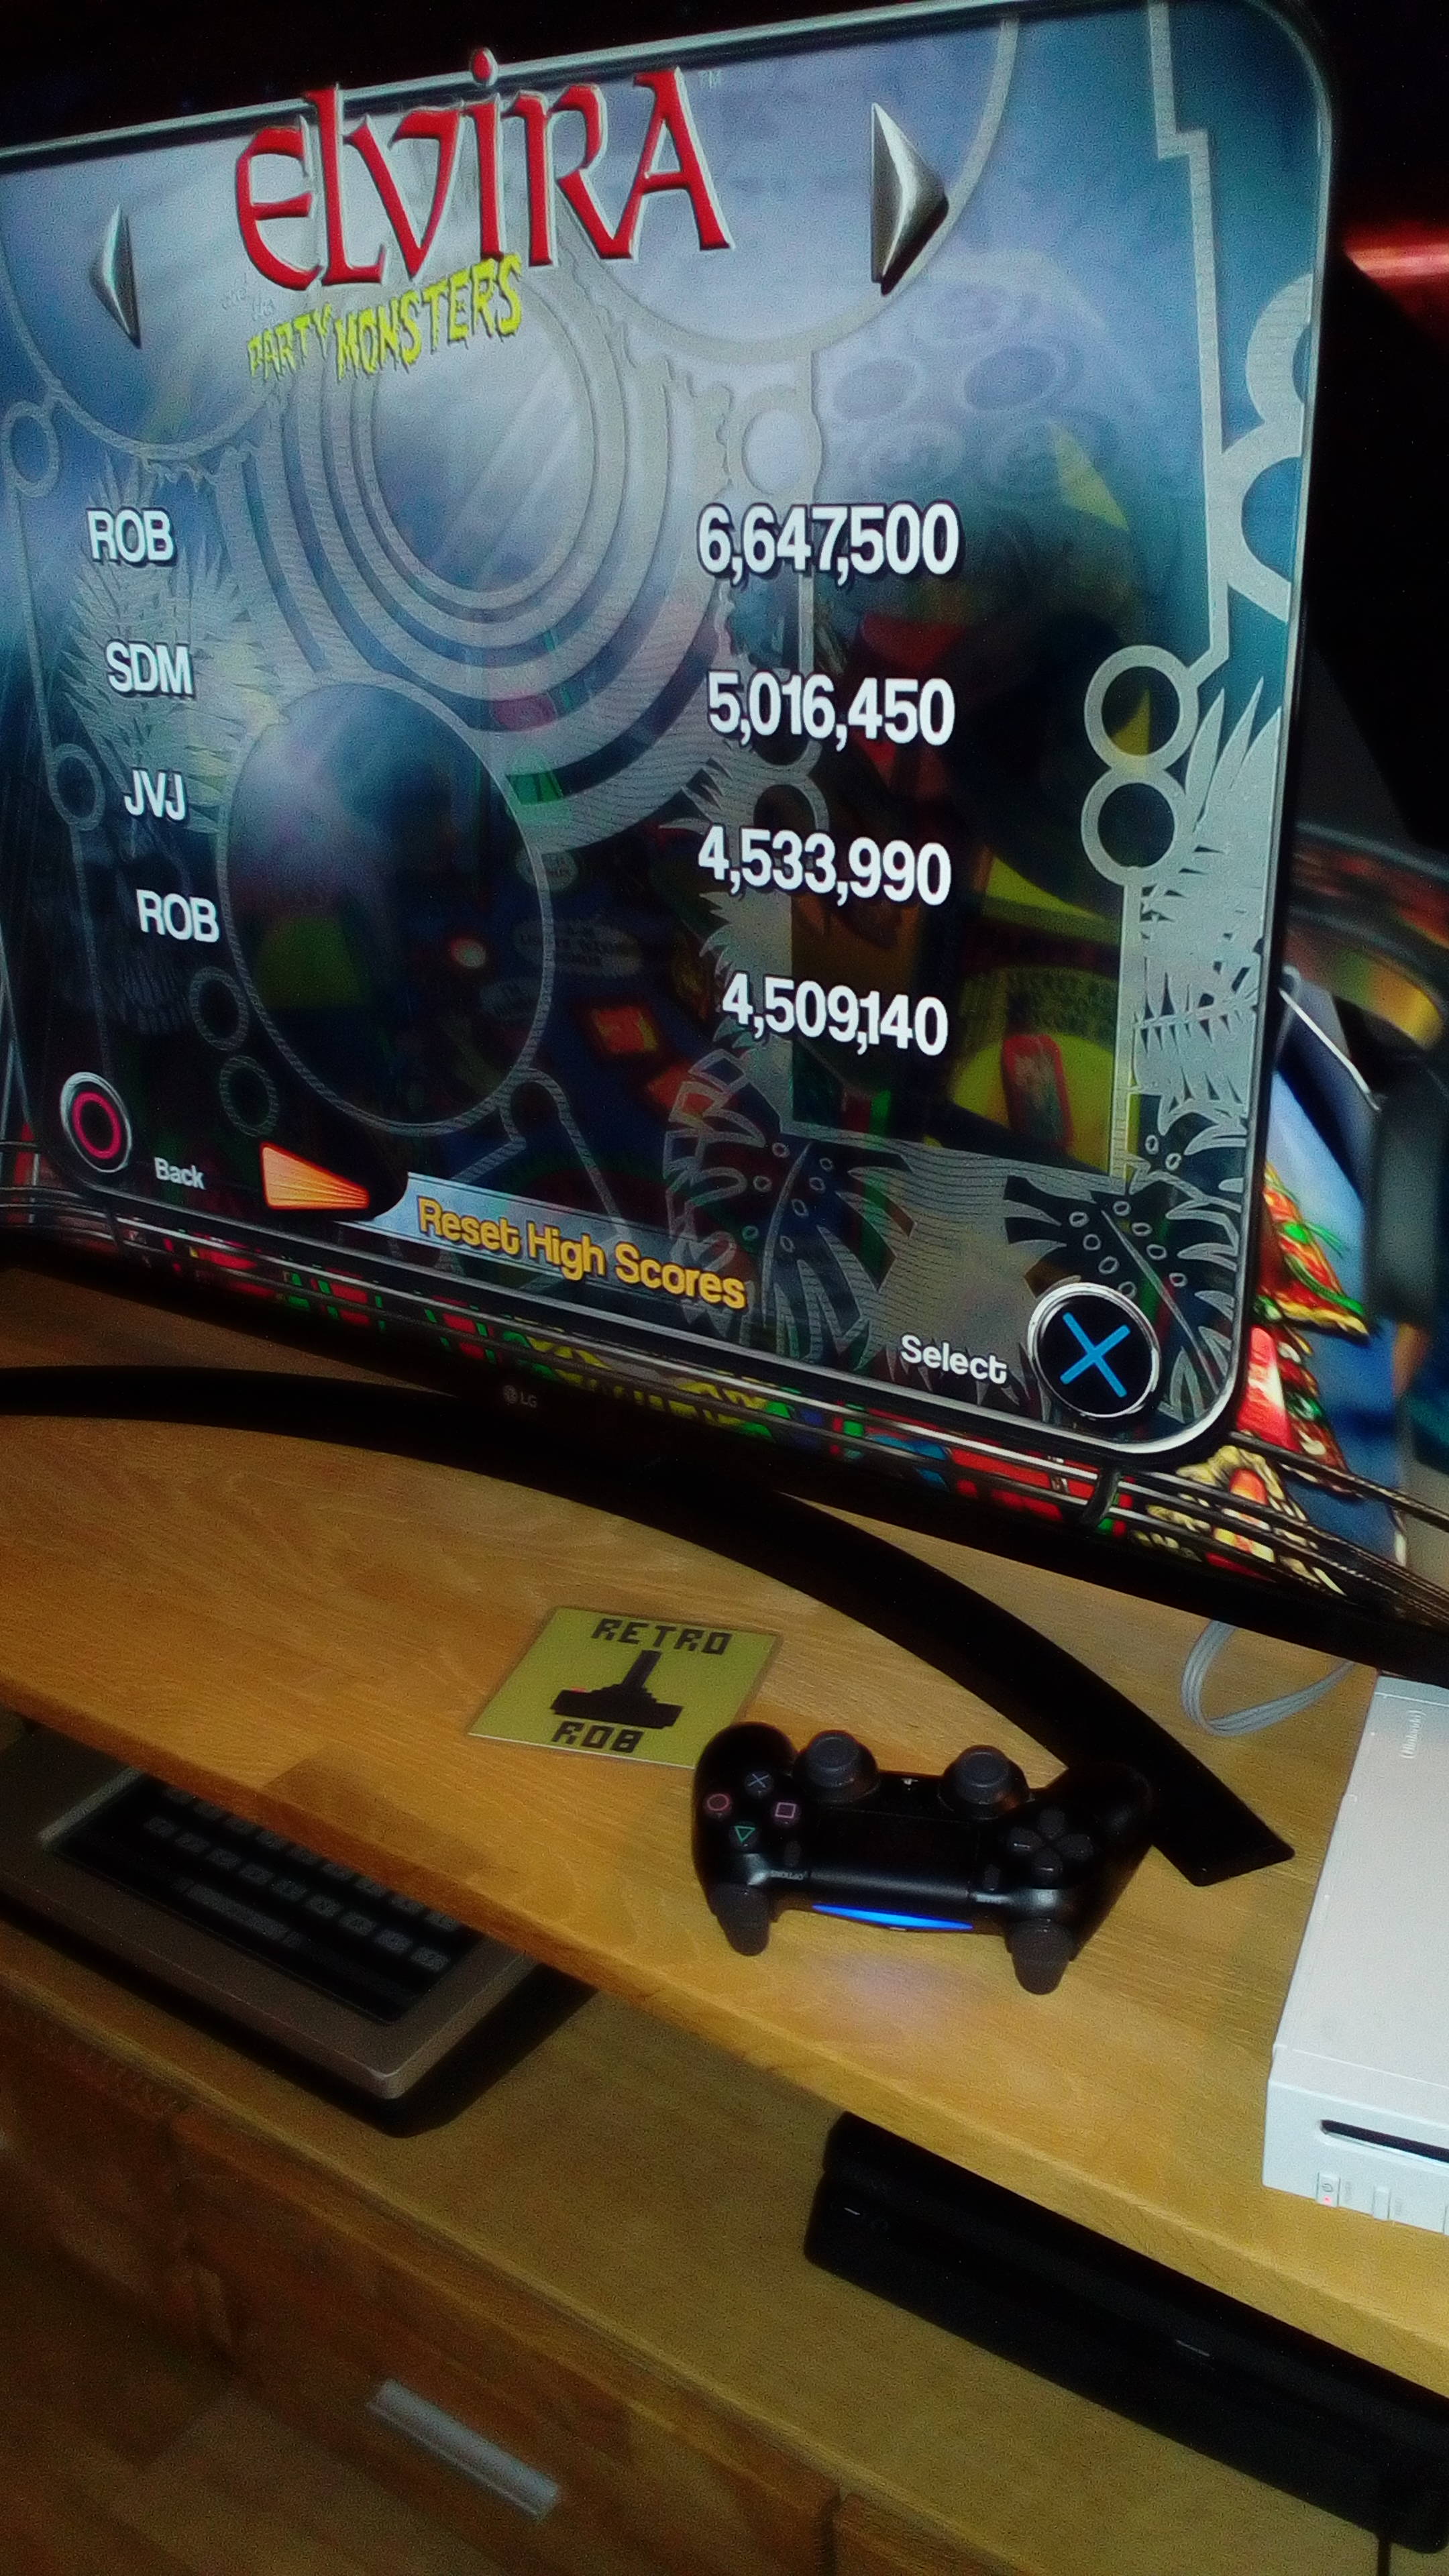 RetroRob: Pinball Arcade: Elvira (Playstation 4) 6,647,500 points on 2021-11-13 09:05:07